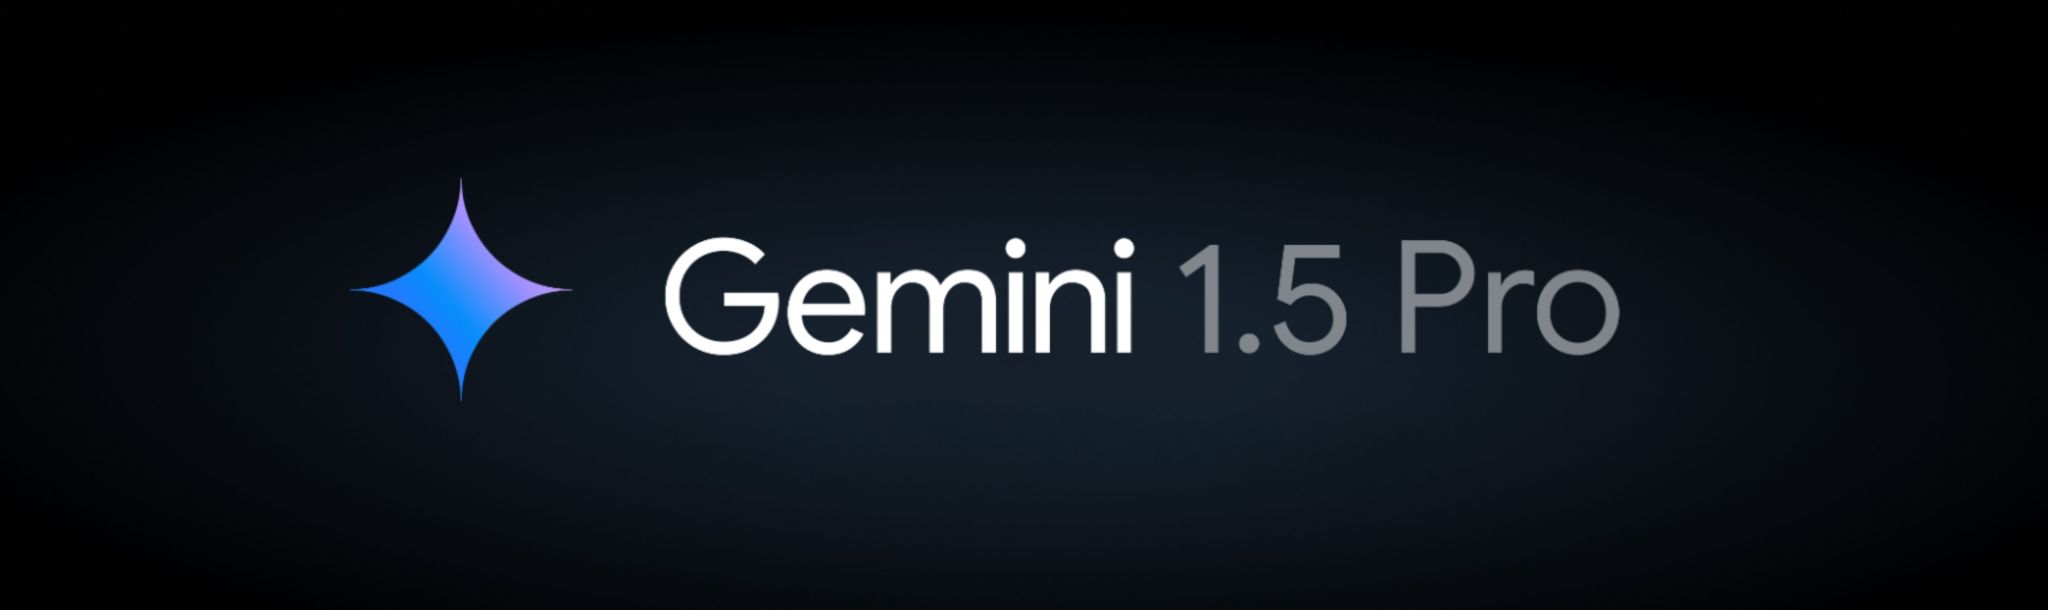 Google Unveils Gemini Suite Updates: 1.5 Flash, Project Astra Push Conversational AI Boundaries